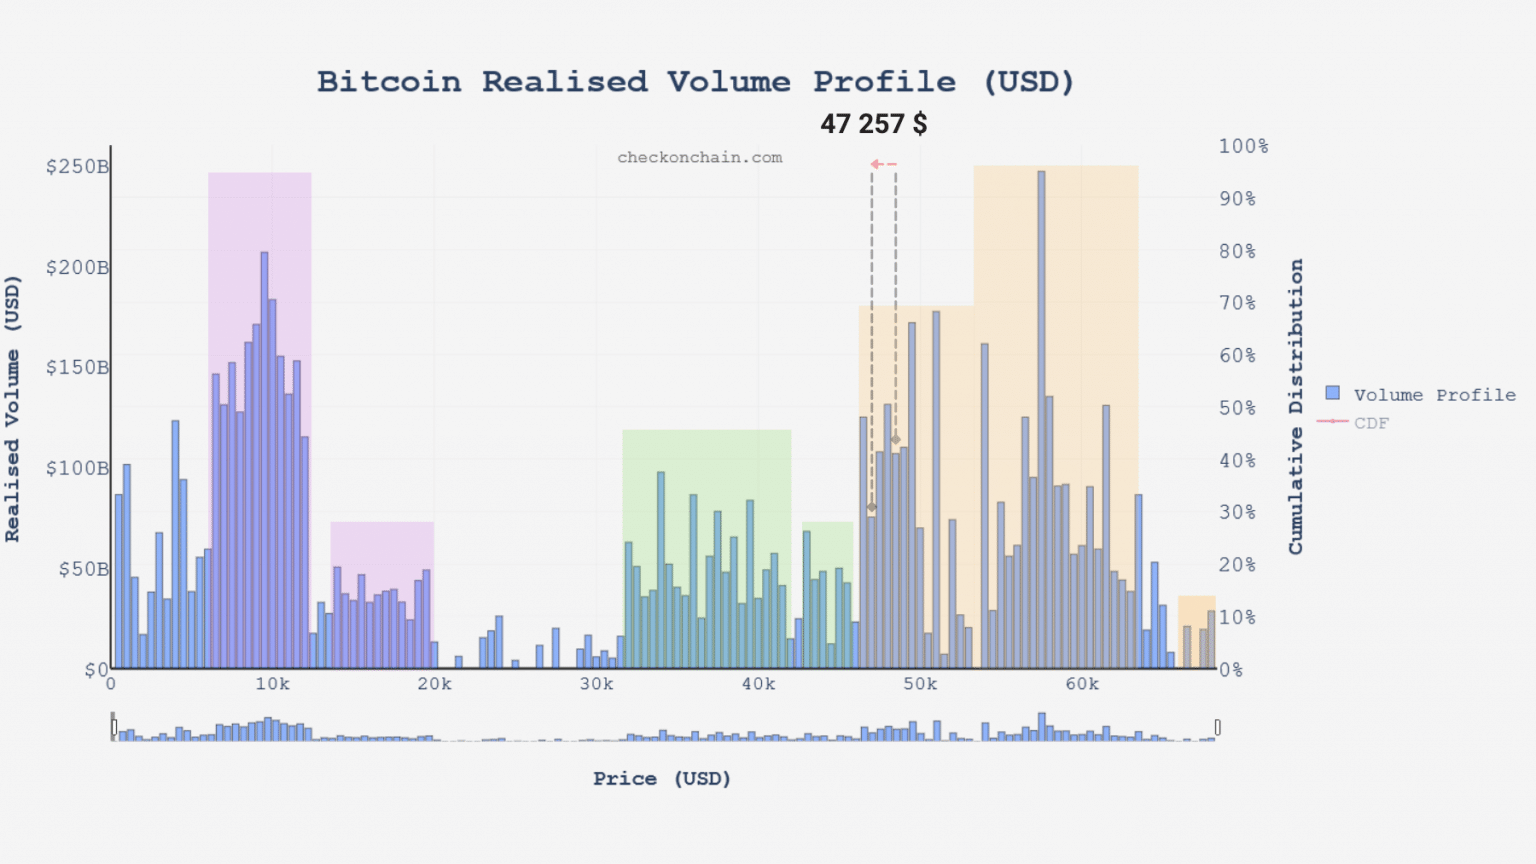 Realized Volume Chart of Bitcoin (BTC) (Source: checkonchain.com)